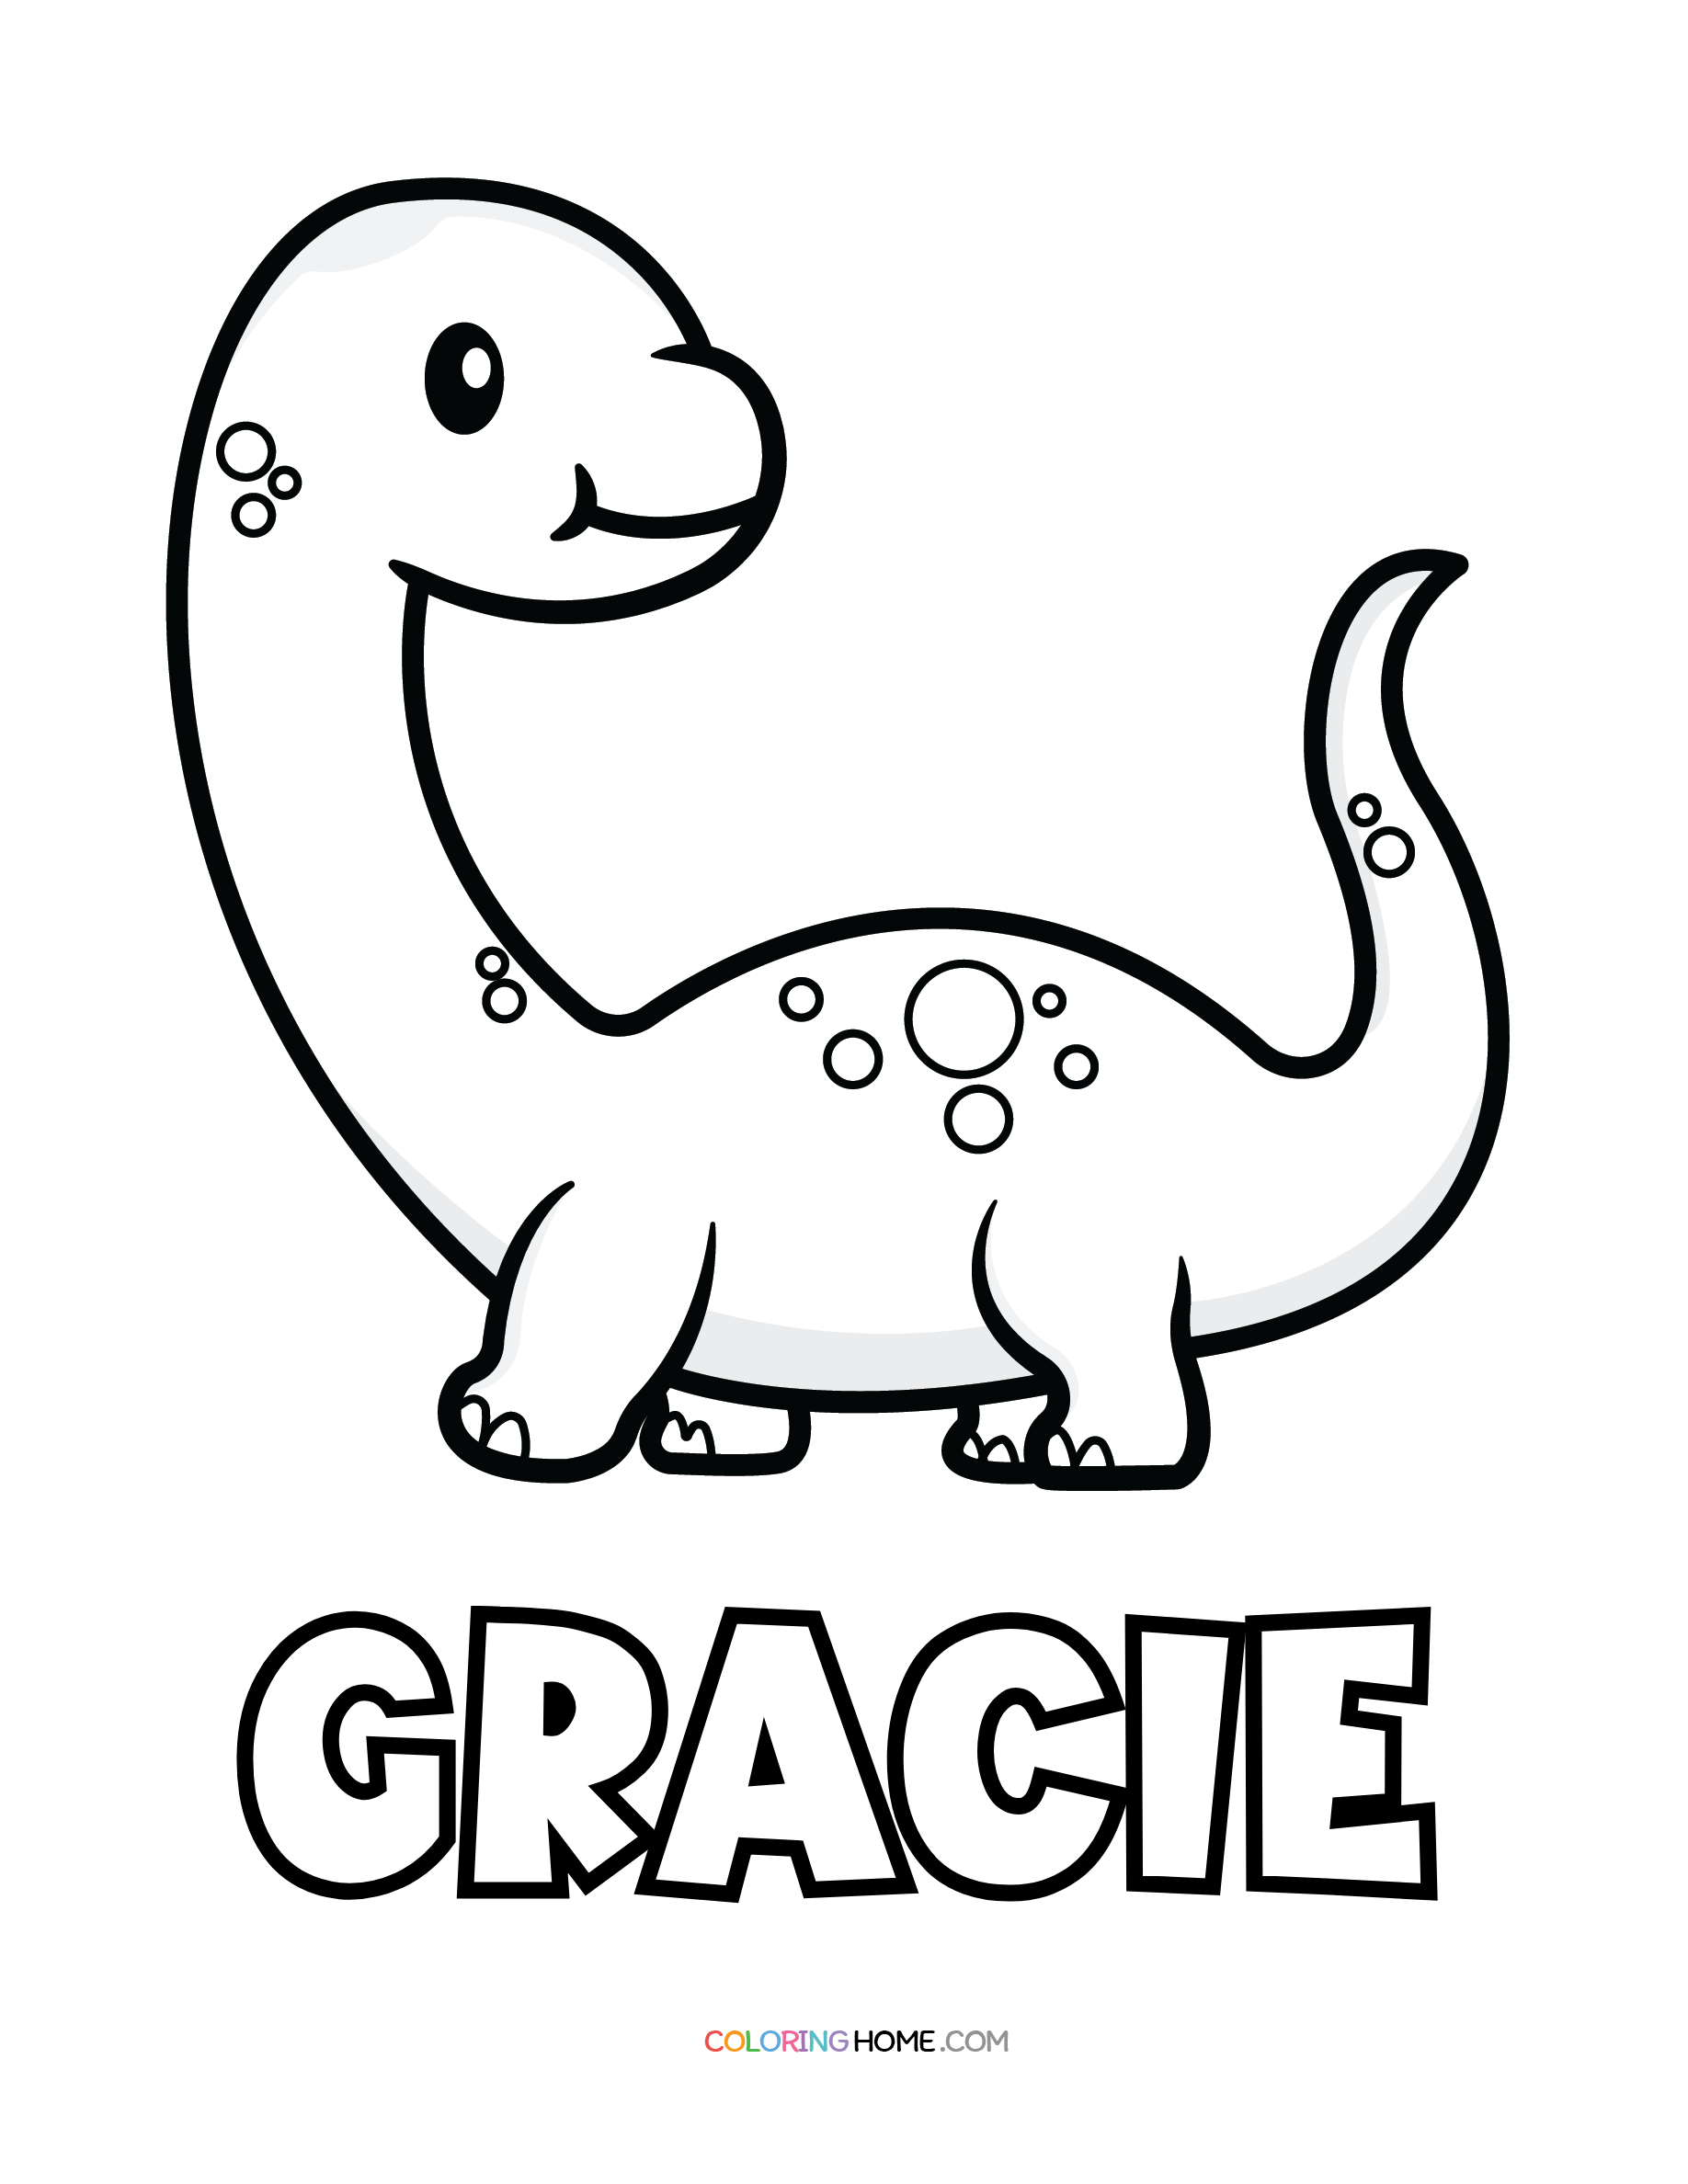 Gracie dinosaur coloring page